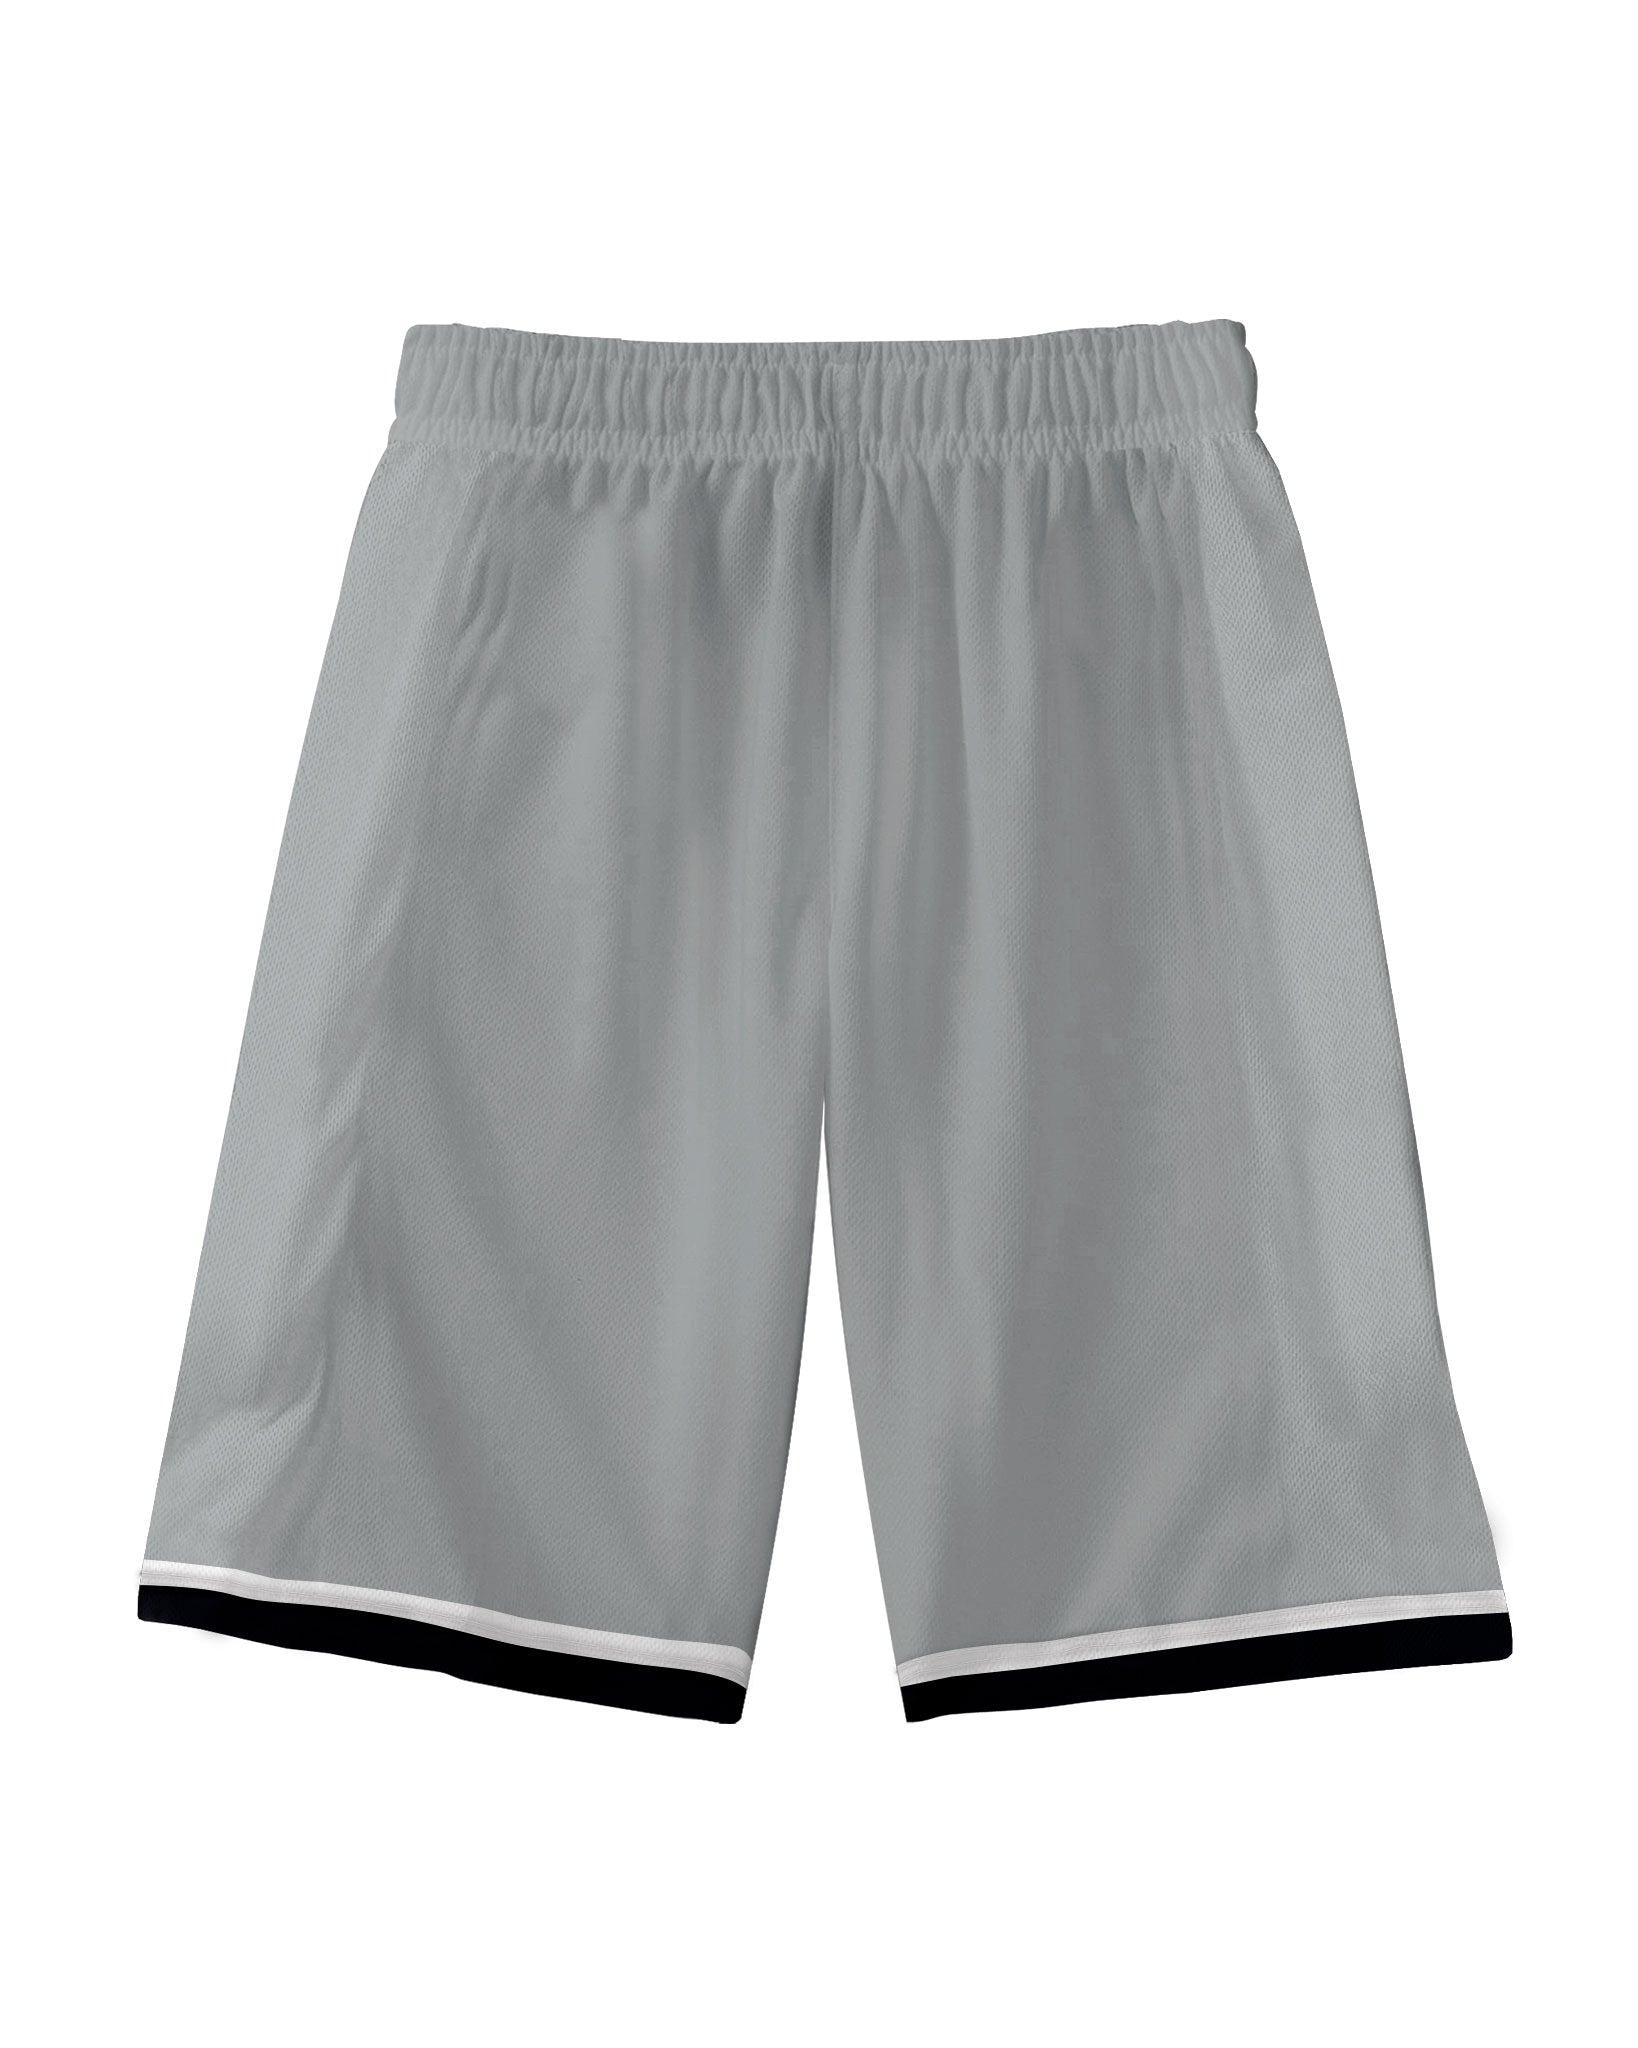 Sale Build Gray Basketball White Shorts Black – CustomJerseysPro